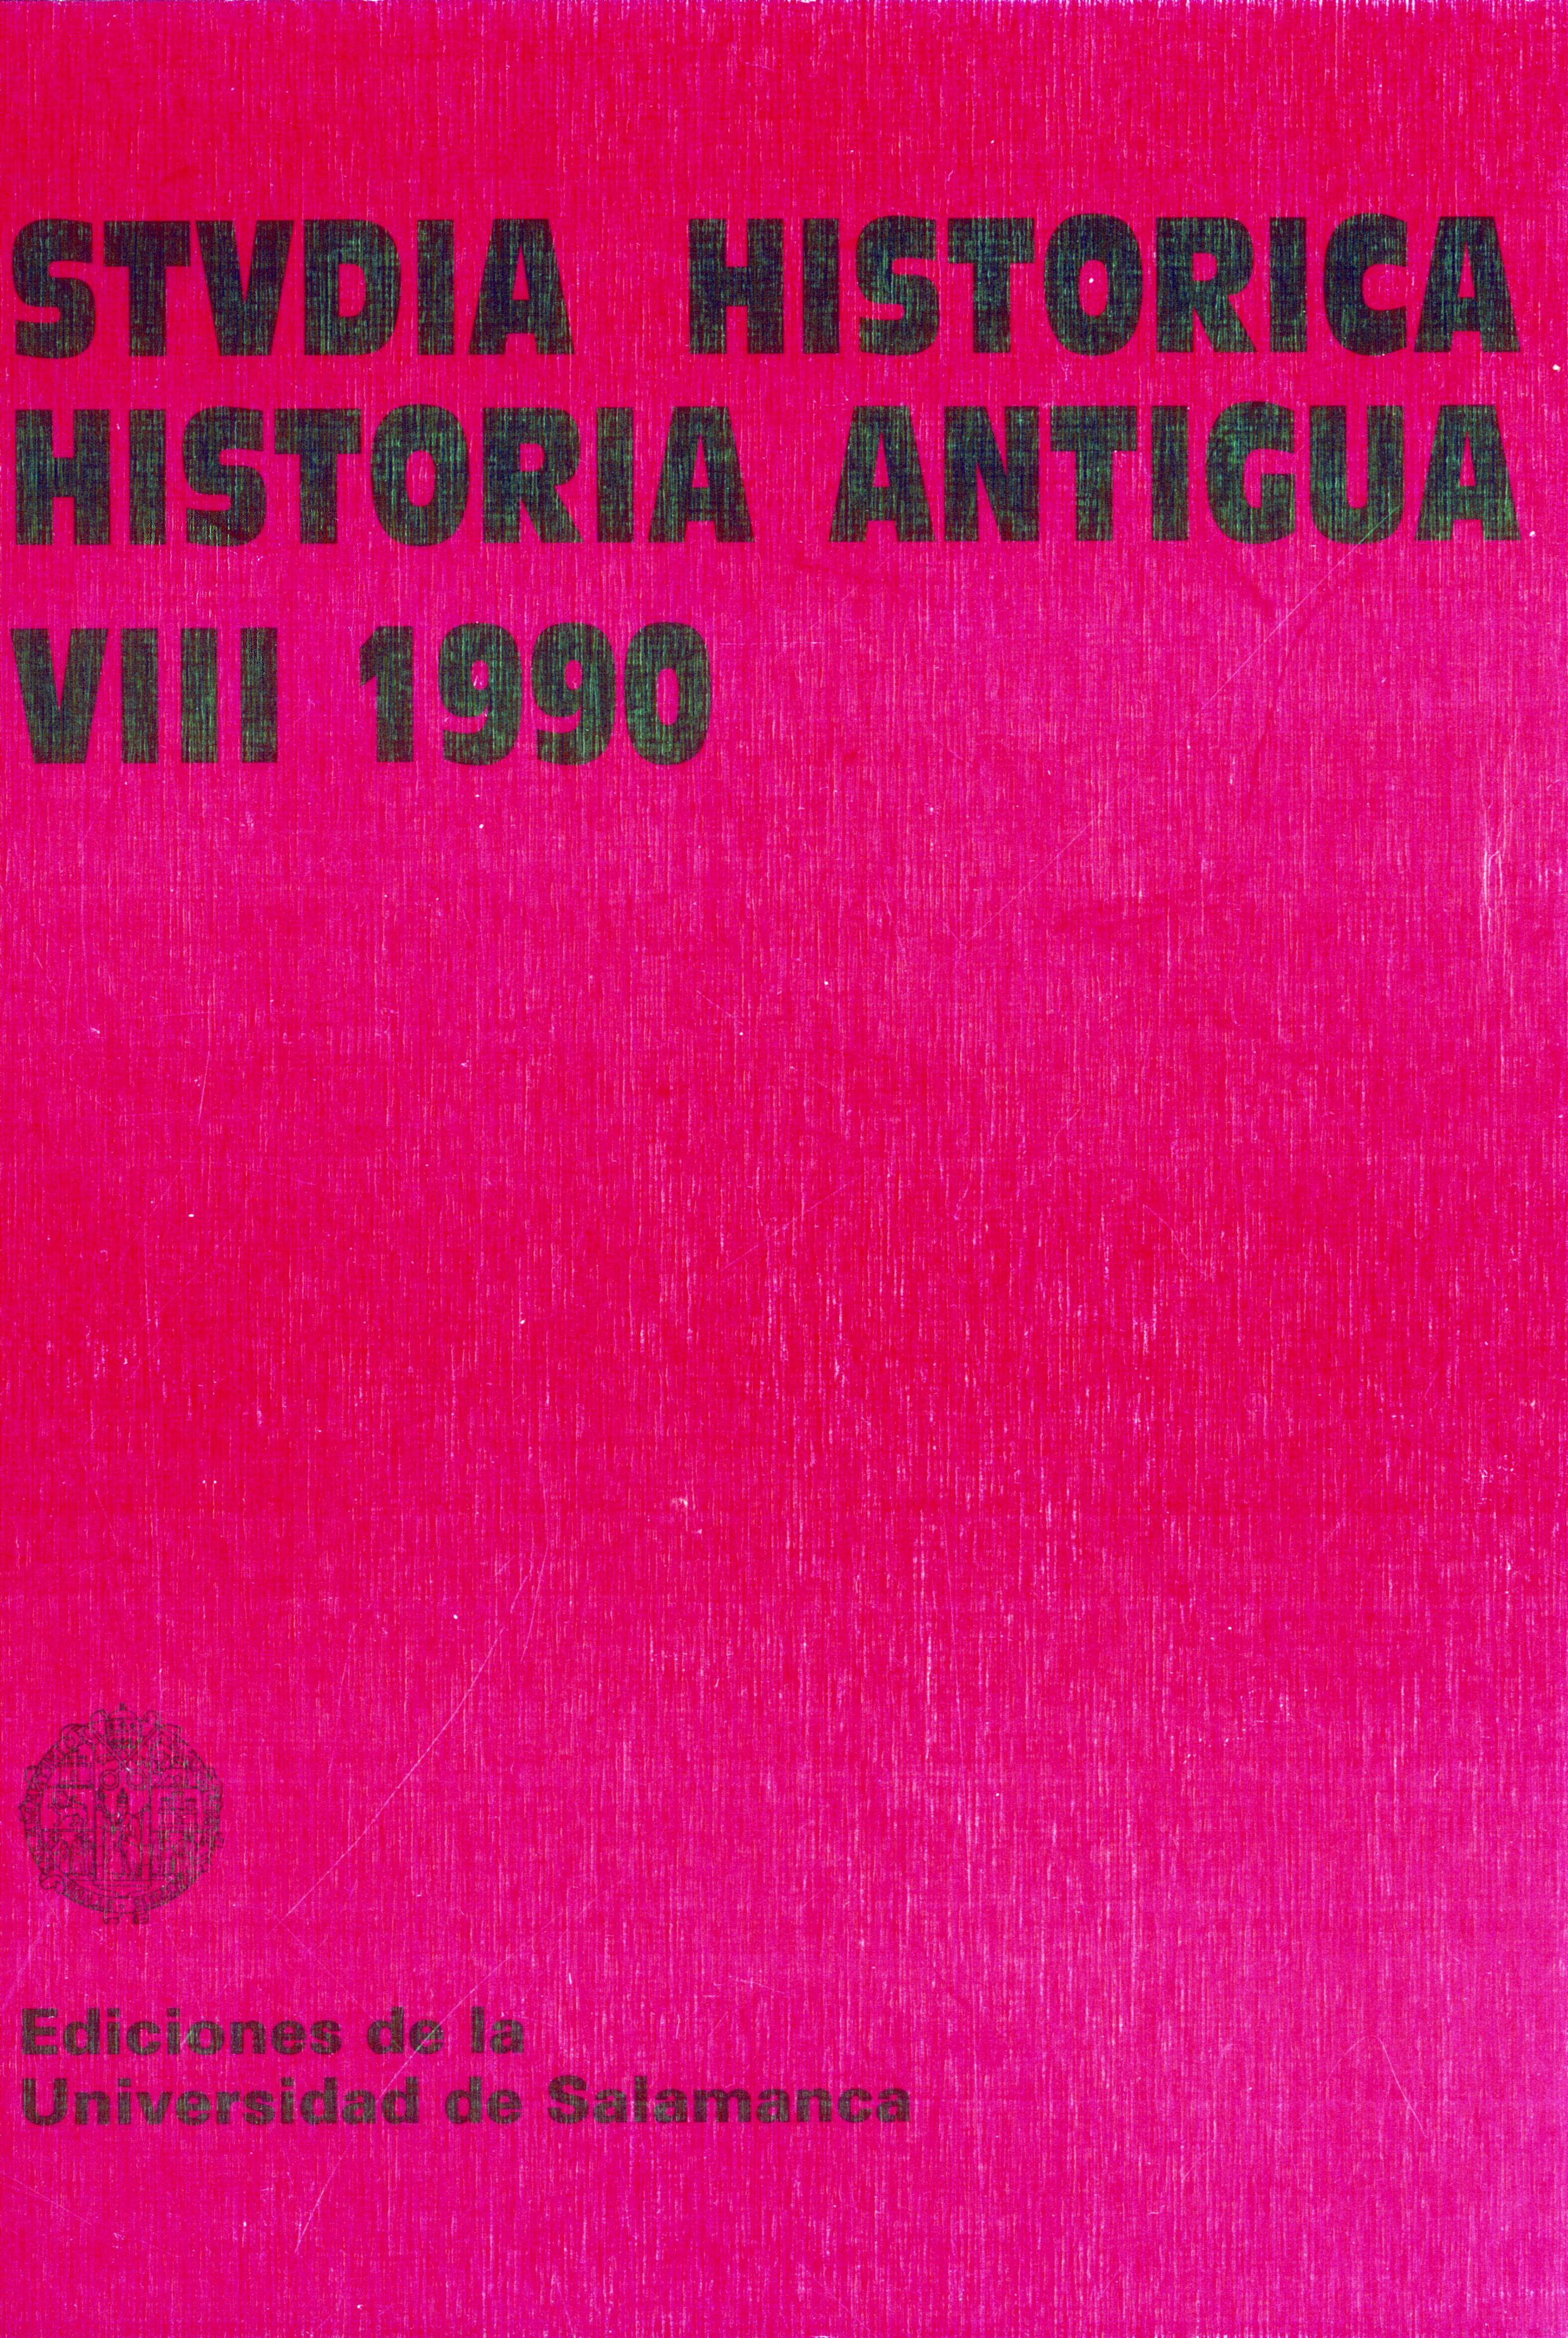                         Ver Vol. 8 (1990)
                    